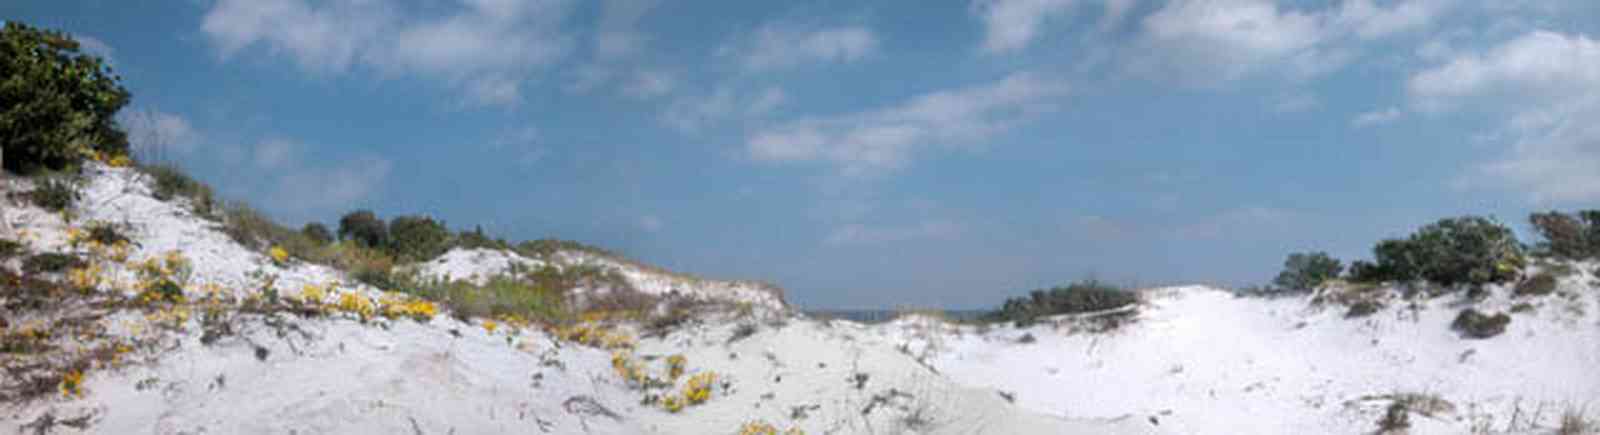 Gulf-Islands-National-Seashore:-Dunes:-Parking-Lot-9_02.jpg:  sand dunes, quartz sand, sea oats, wild flowers